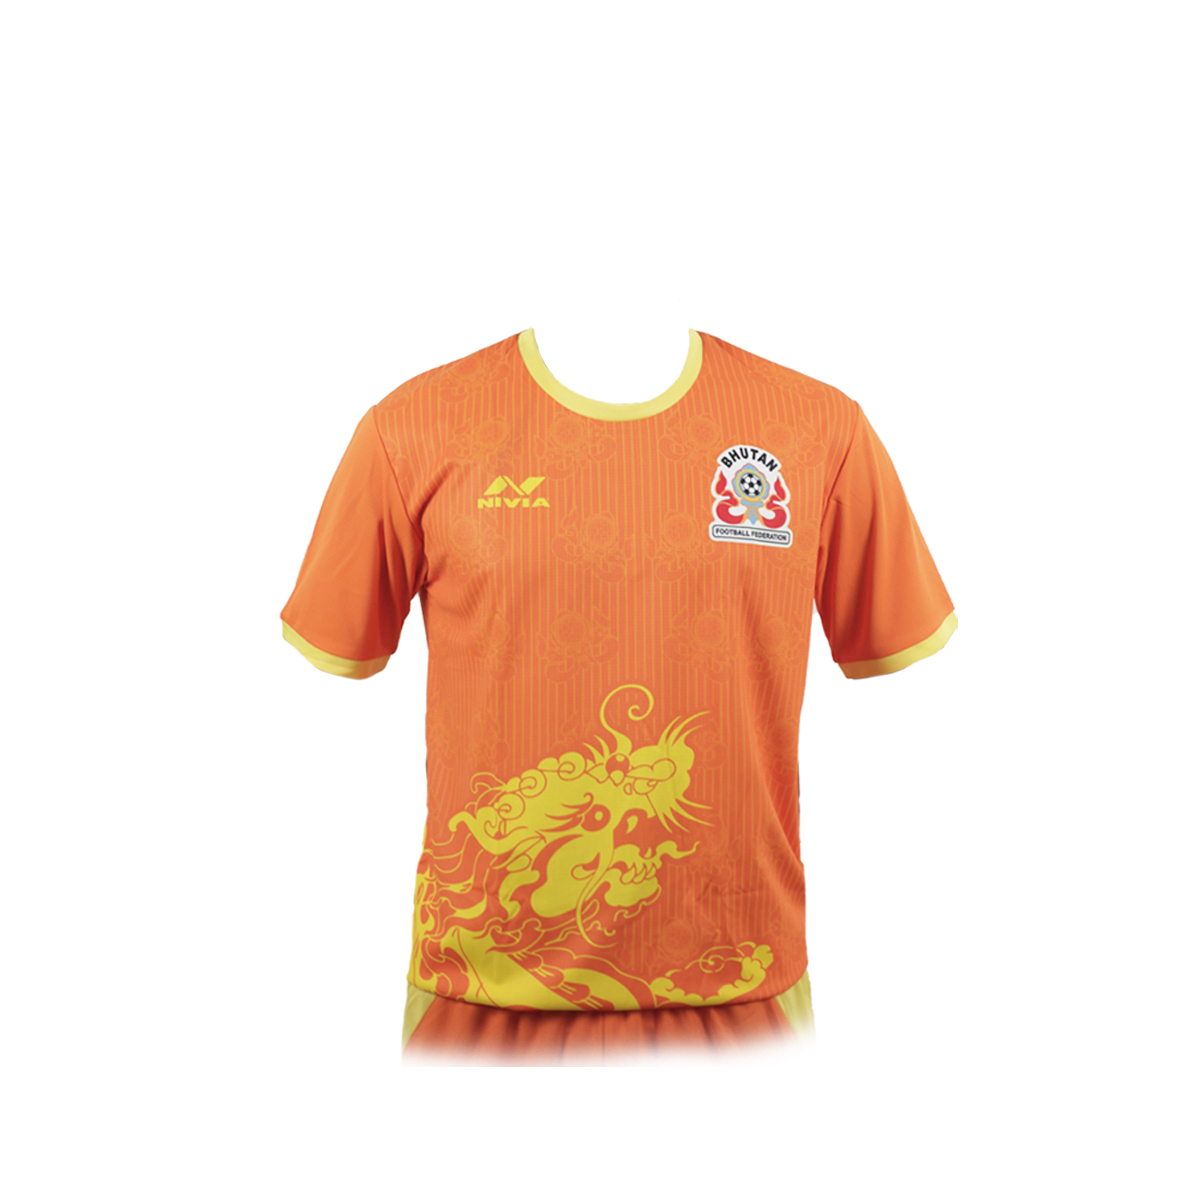 NIVIA Sportswear Football Jersey - Orange & Yellow (Sizes S)